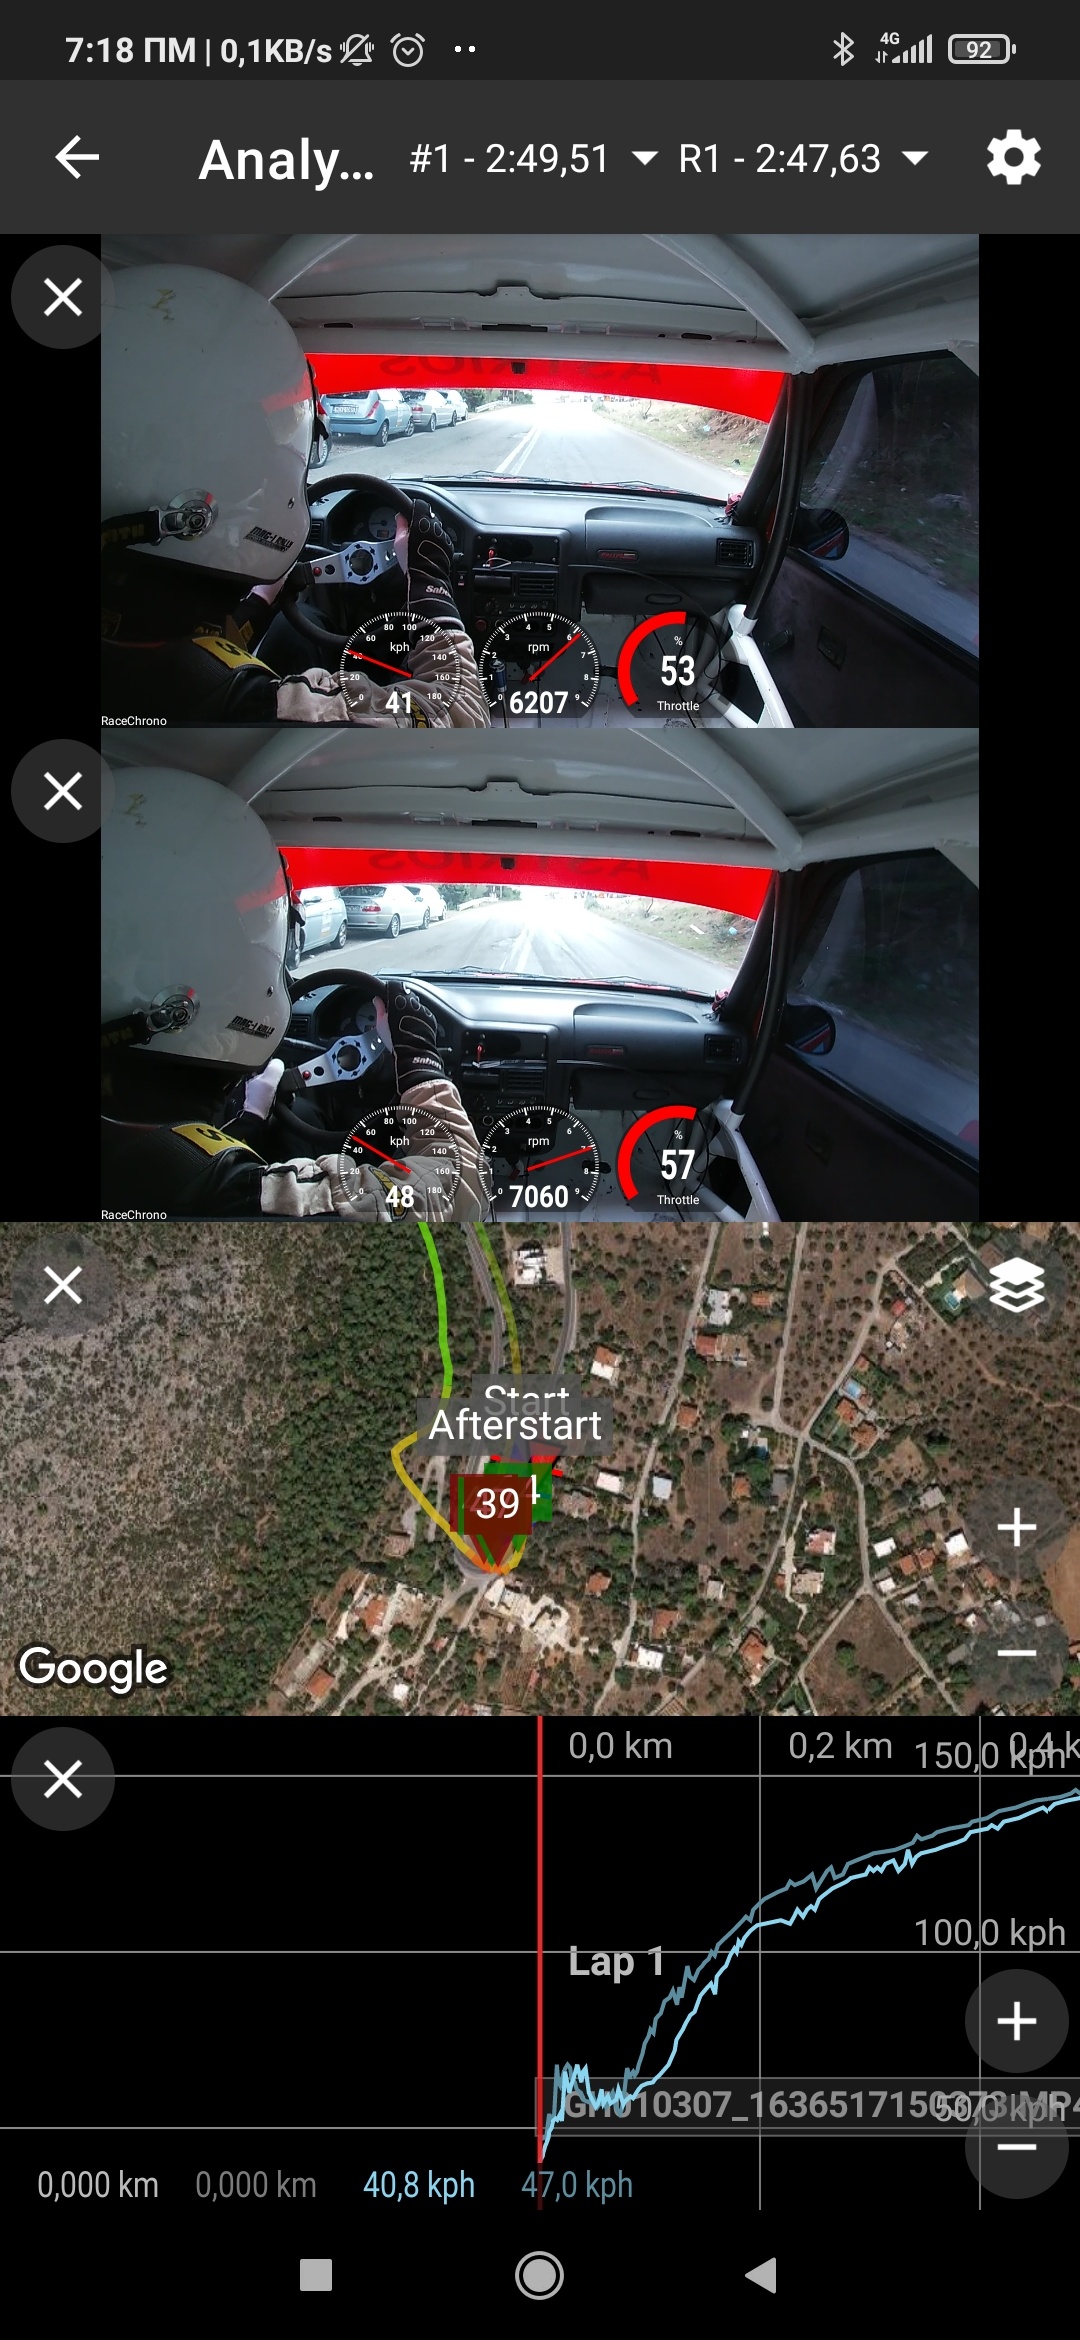 Screenshot_2021-11-13-07-18-52-936_com.racechrono.app.jpg